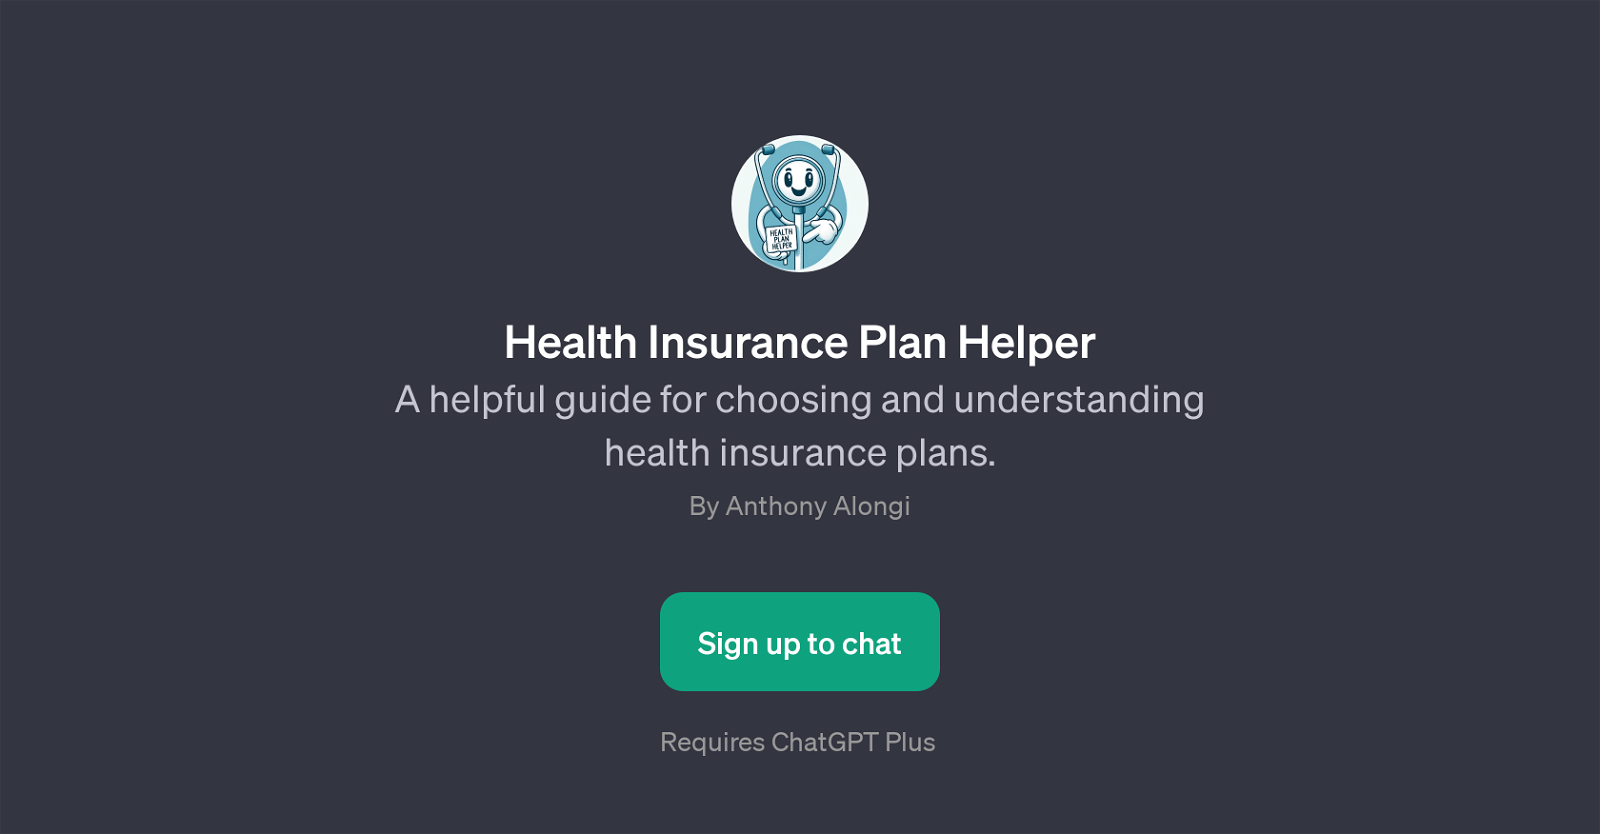 Health Insurance Plan Helper website